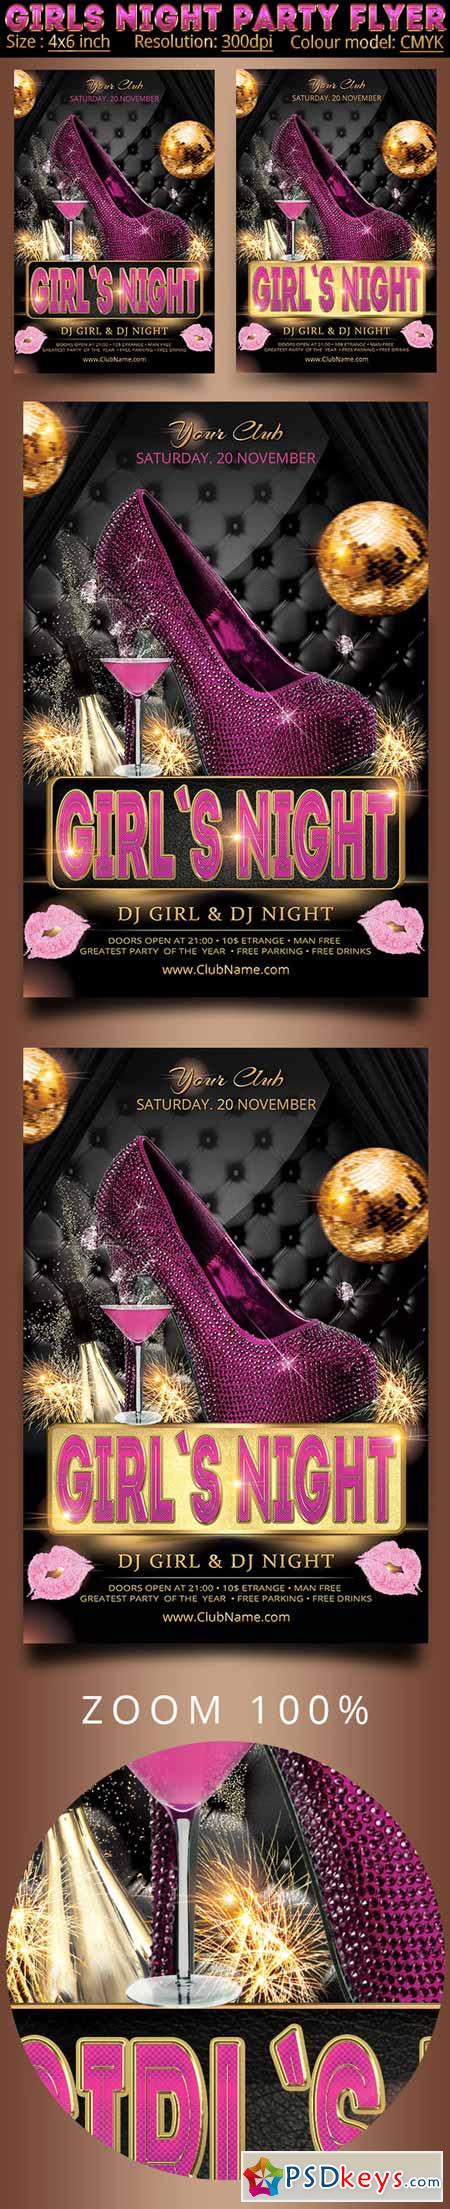 Girls Night Party Flyer 388656